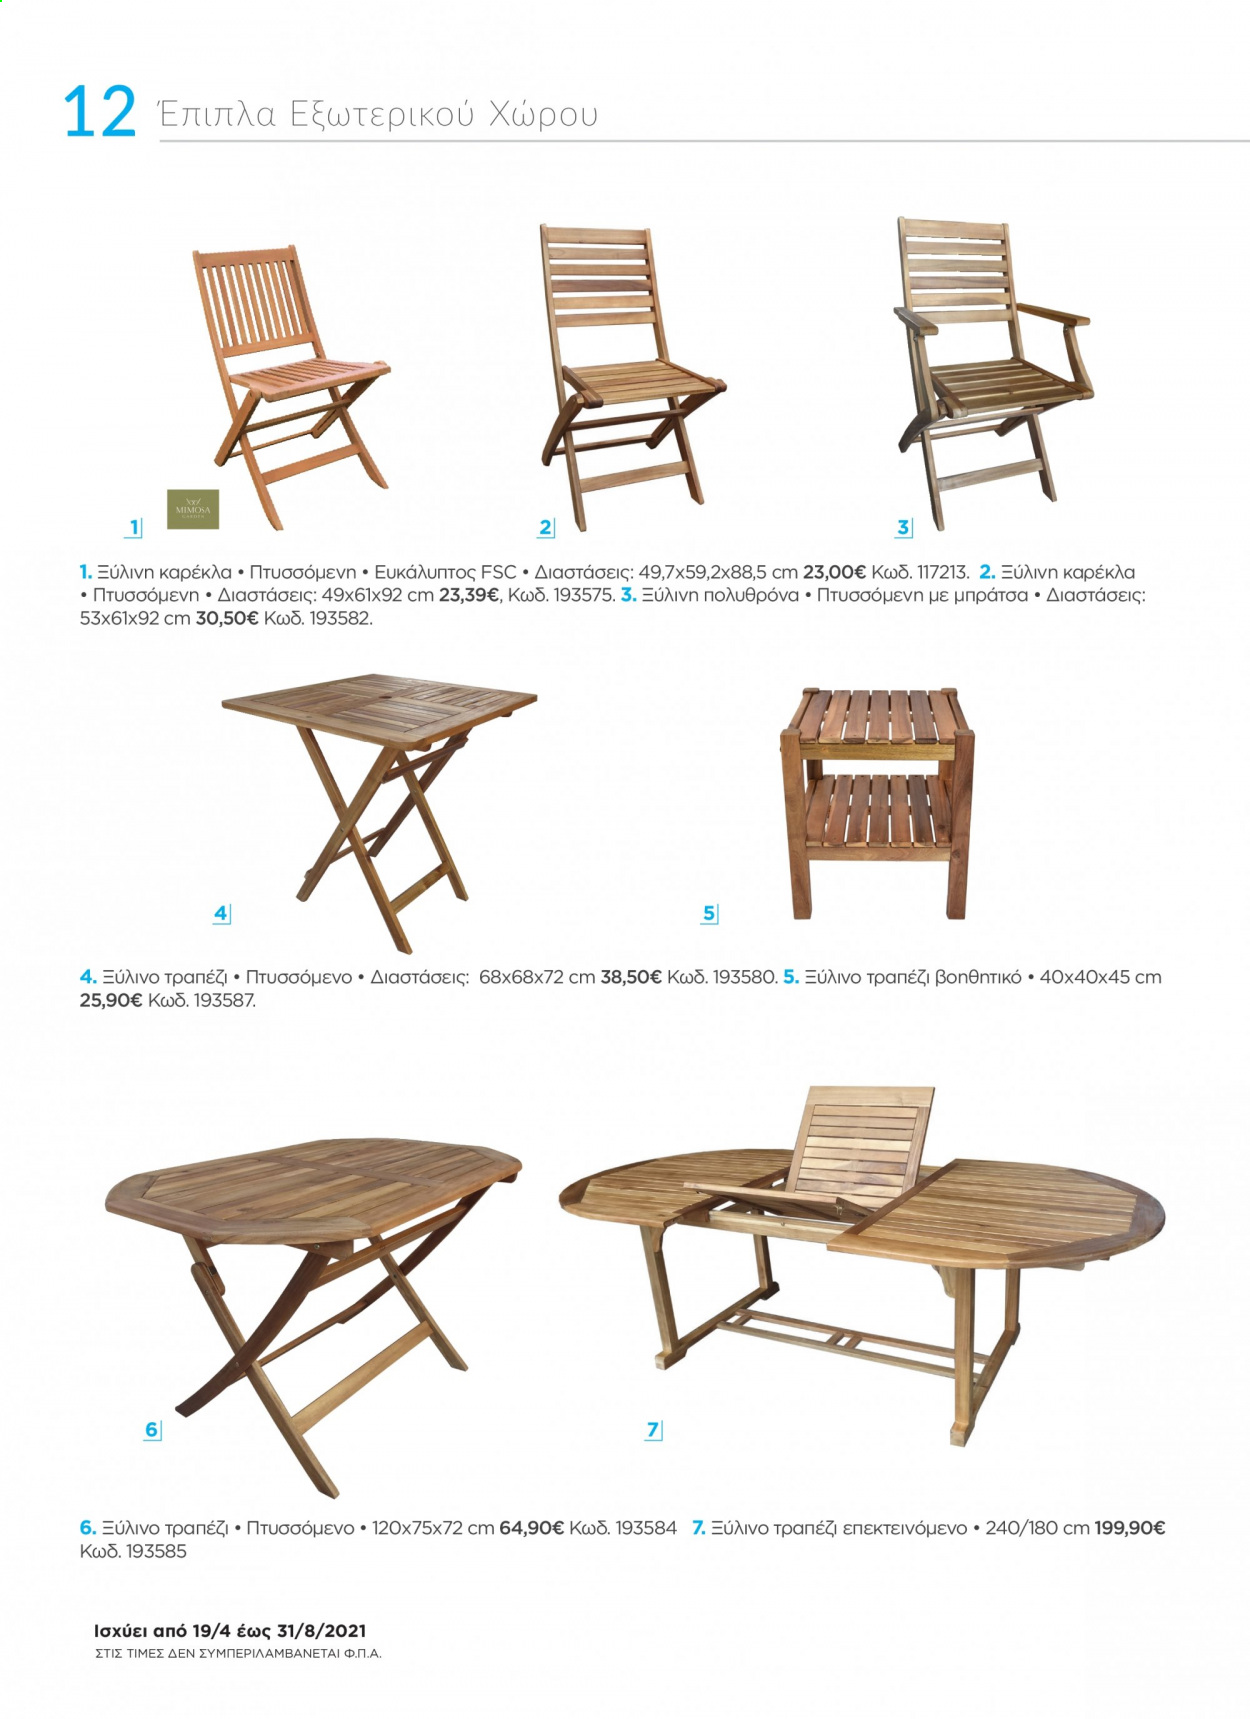 thumbnail - Φυλλάδια The Mart - 19.04.2021 - 31.08.2021 - Εκπτωτικά προϊόντα - τραπέζι, καρέκλα, έπιπλα εξωτερικου χωρου. Σελίδα 12.